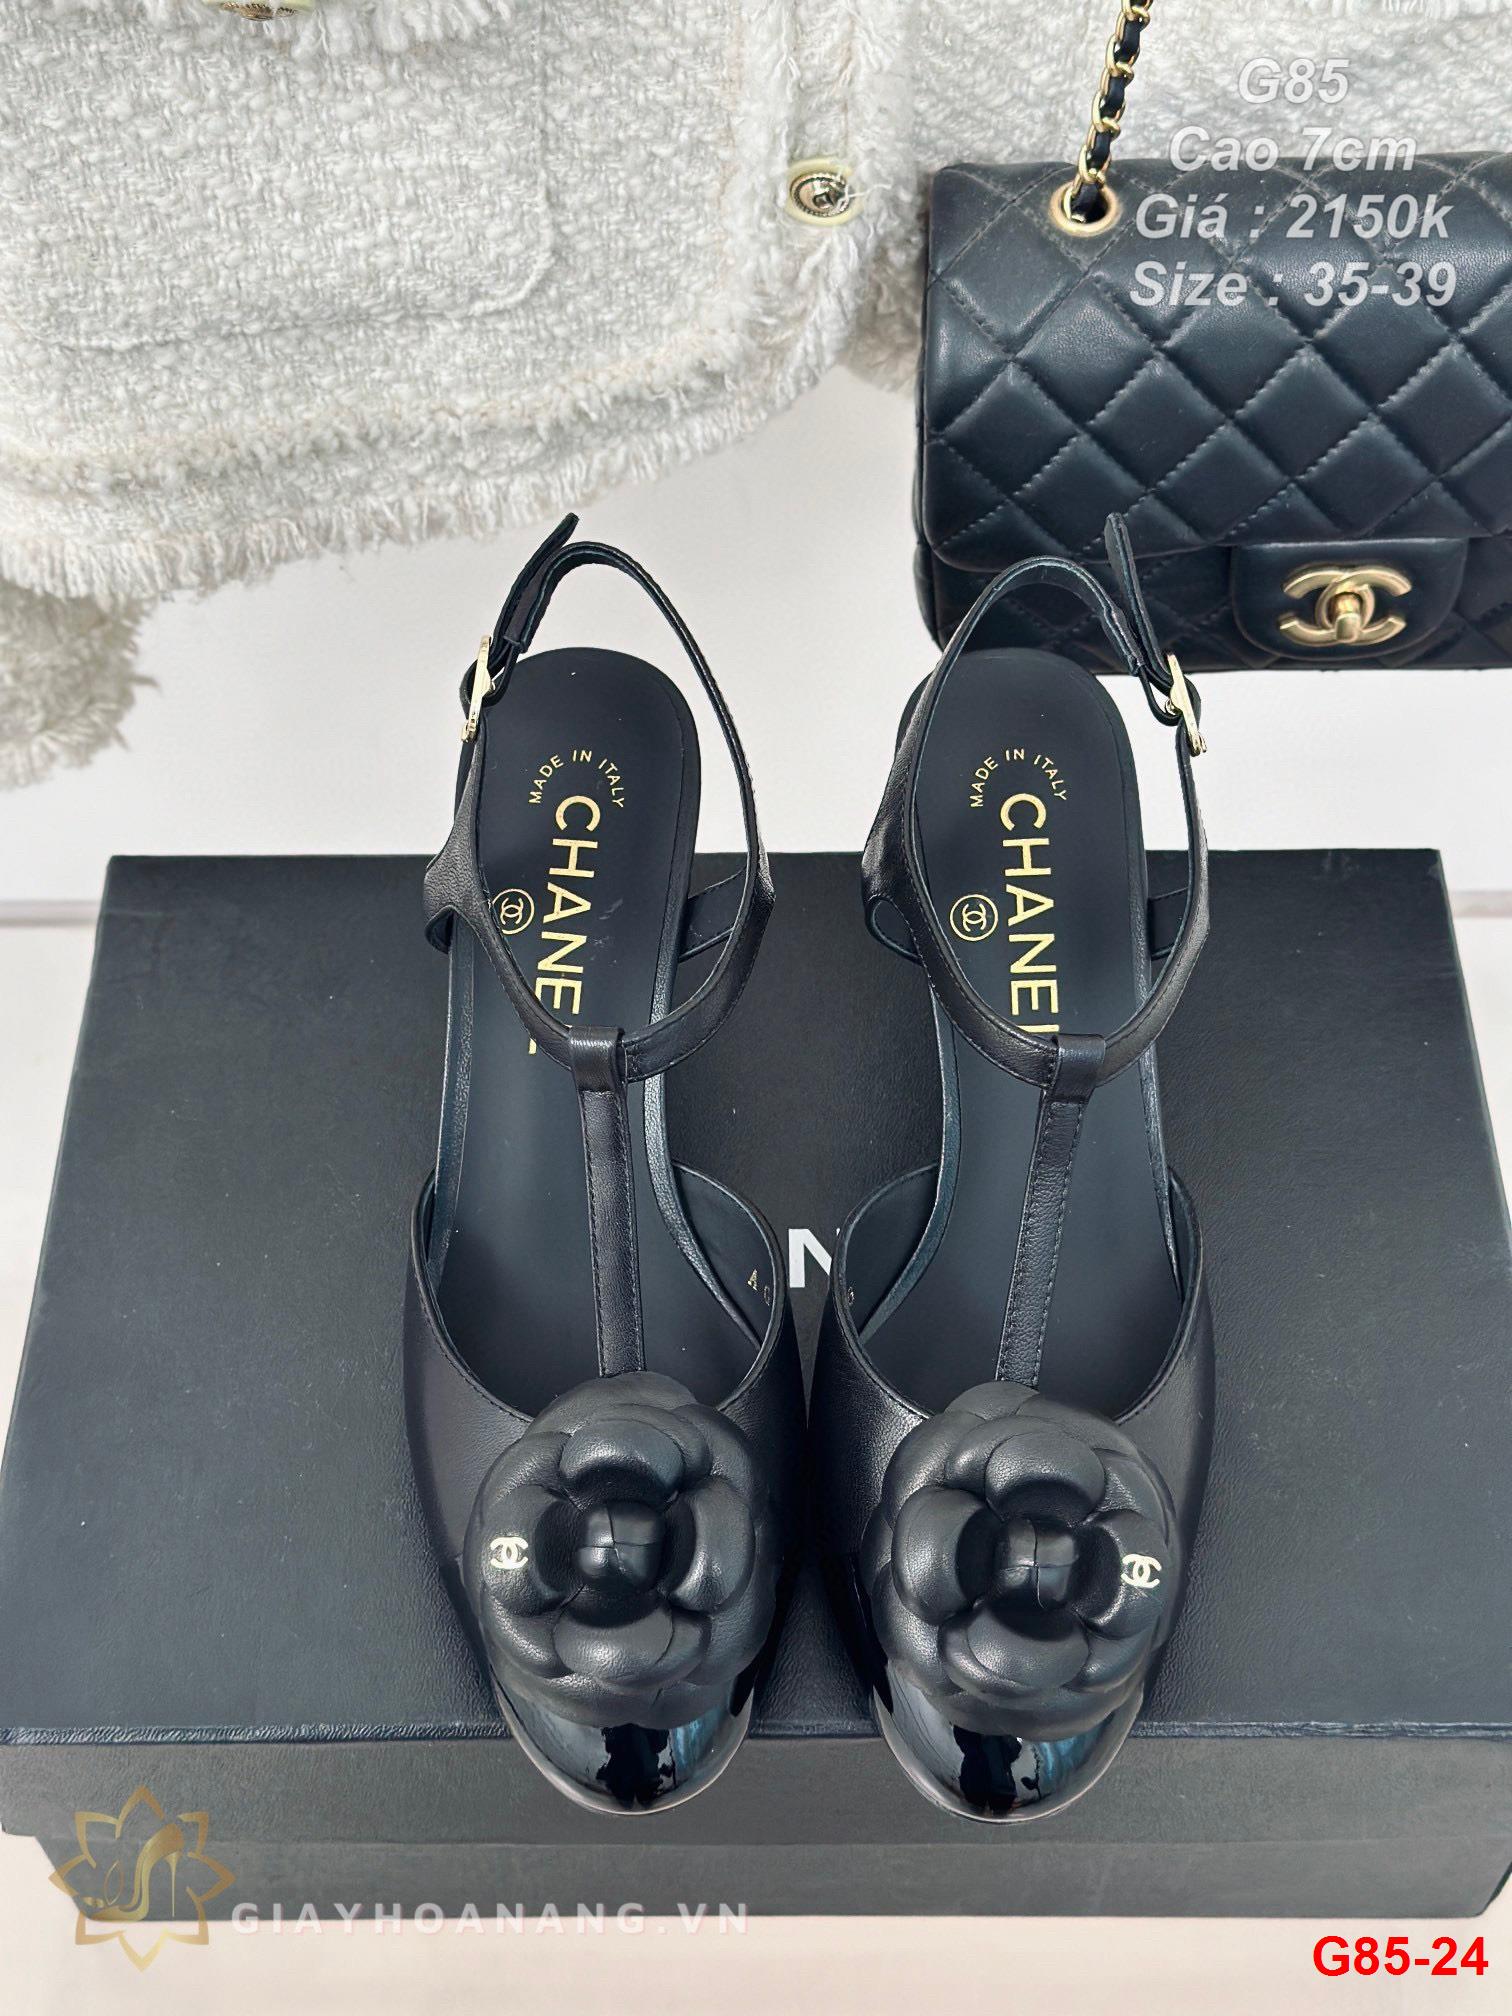 G85-24 Chanel sandal cao 7cm siêu cấp